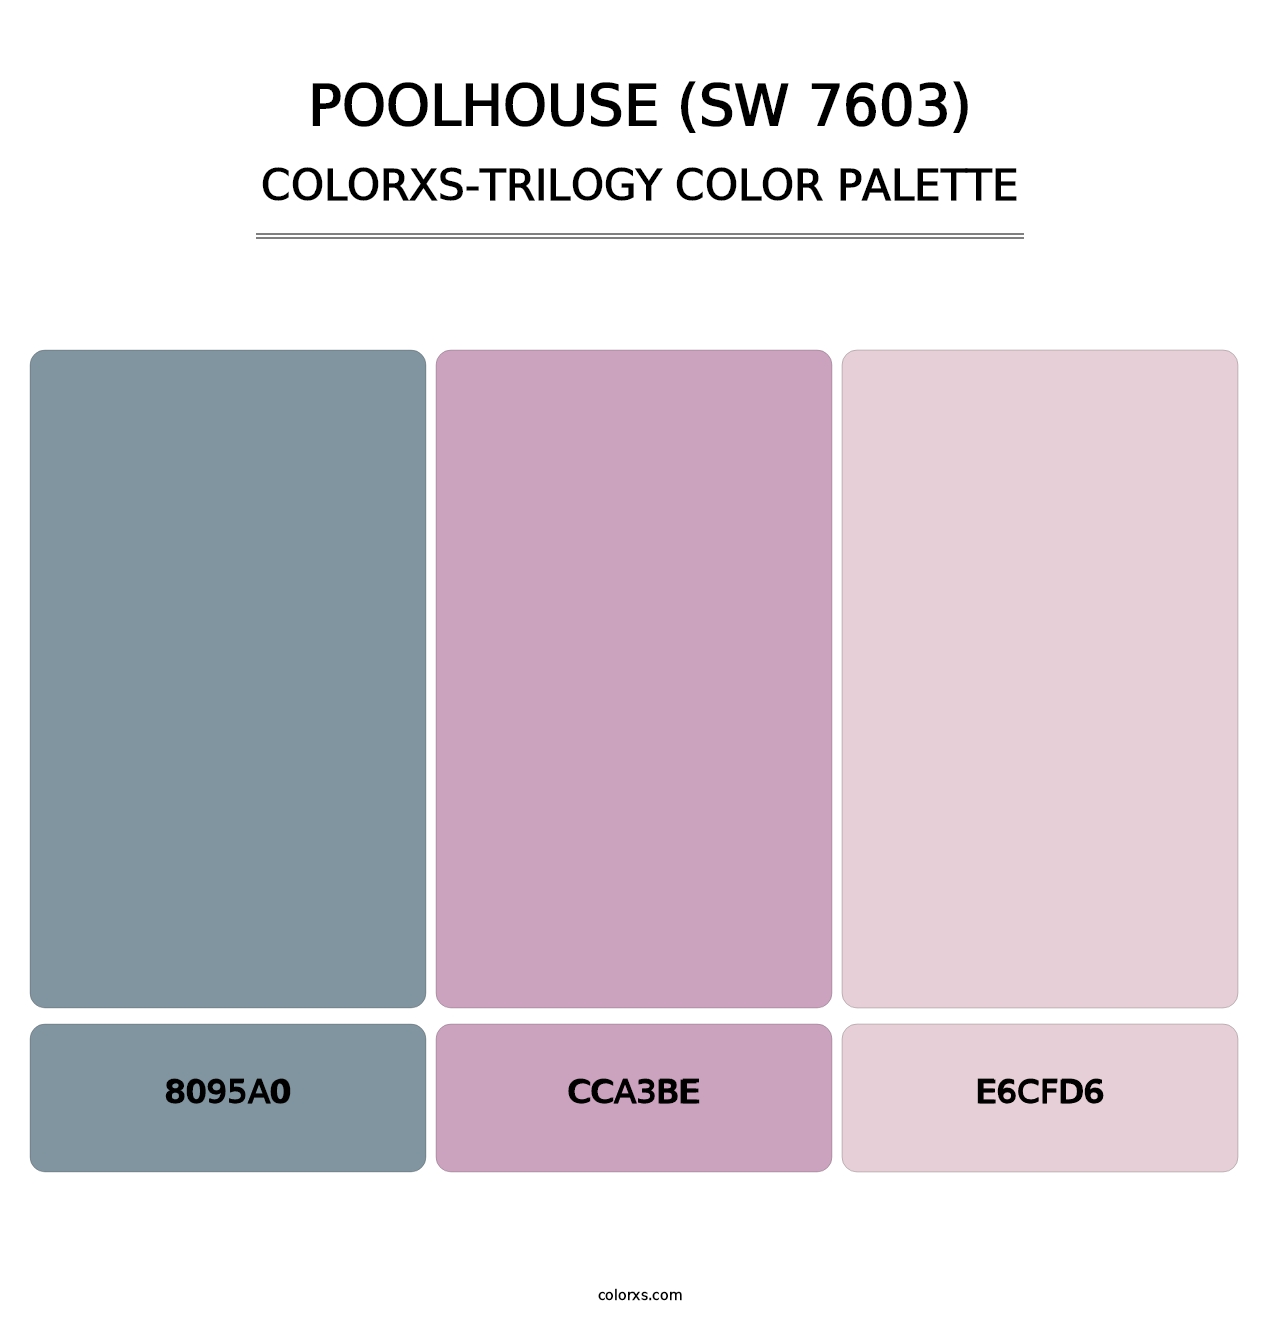 Poolhouse (SW 7603) - Colorxs Trilogy Palette